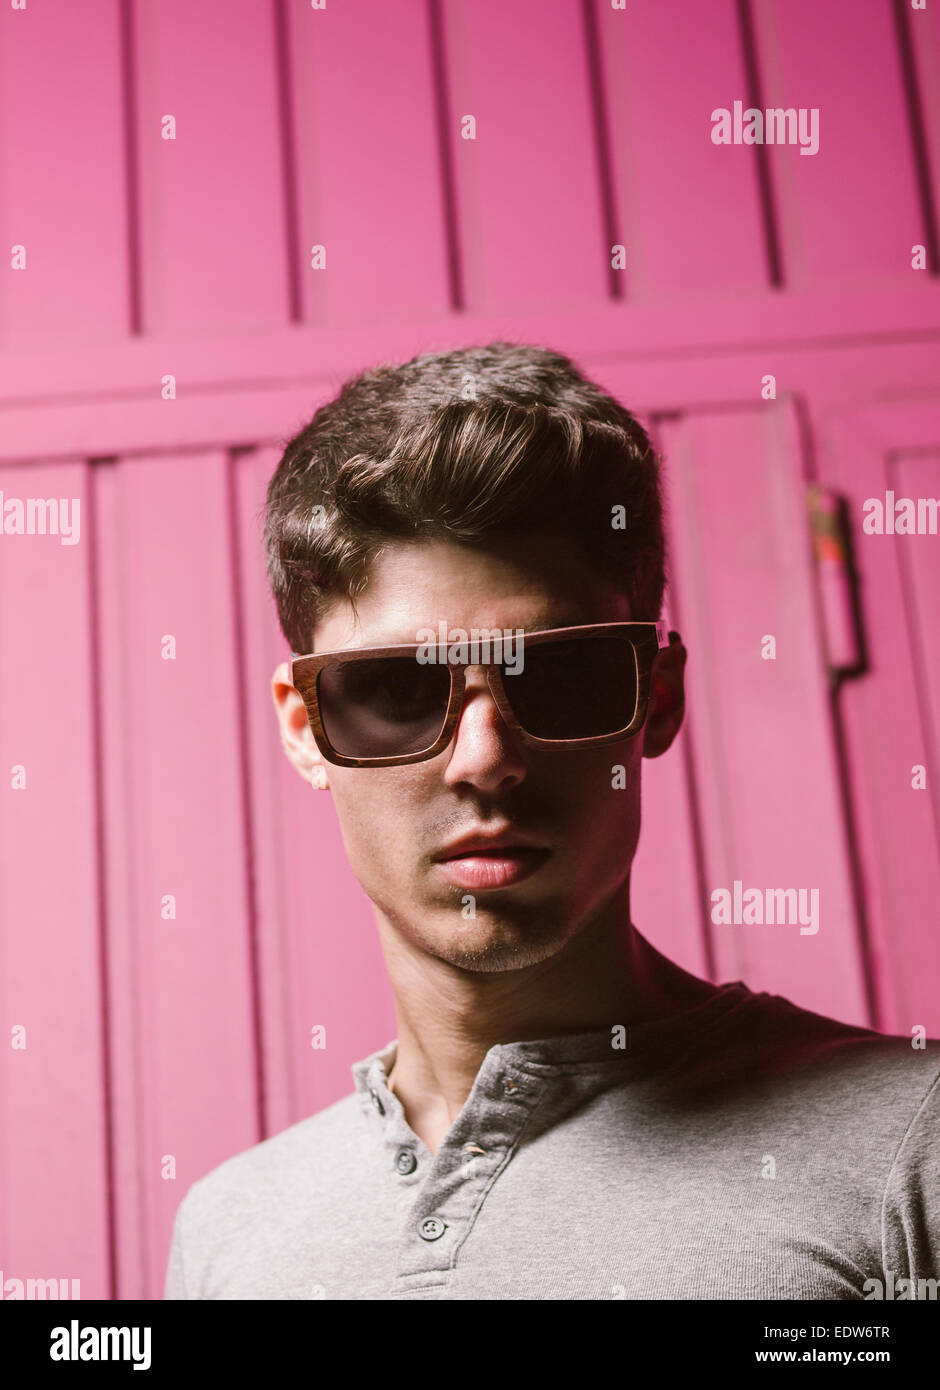 Fashionable man portrait with flash light and fuchsia background Stock Photo